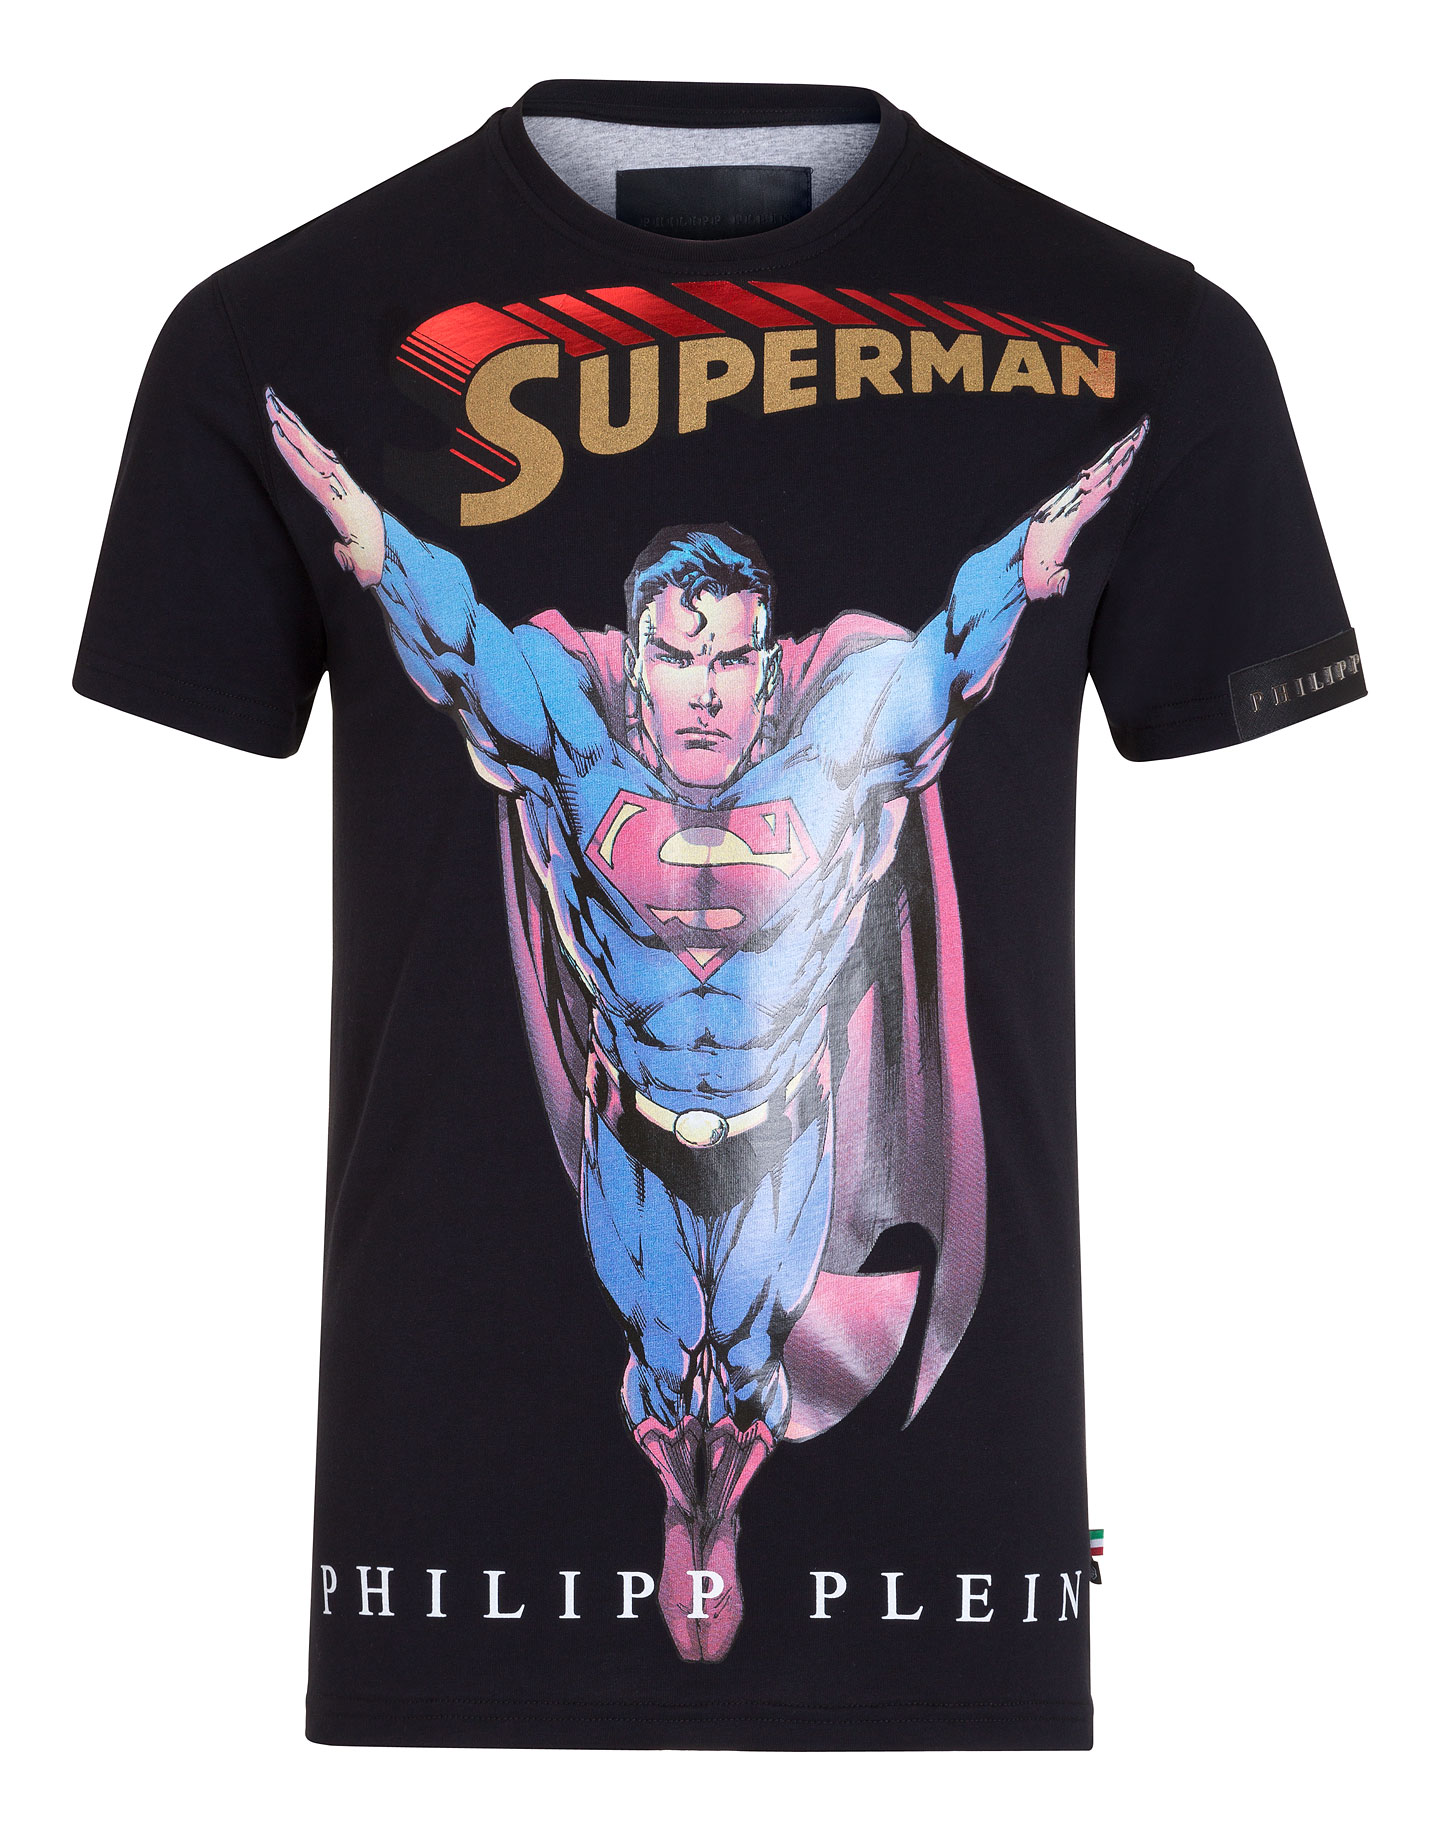 philipp plein superman t shirt